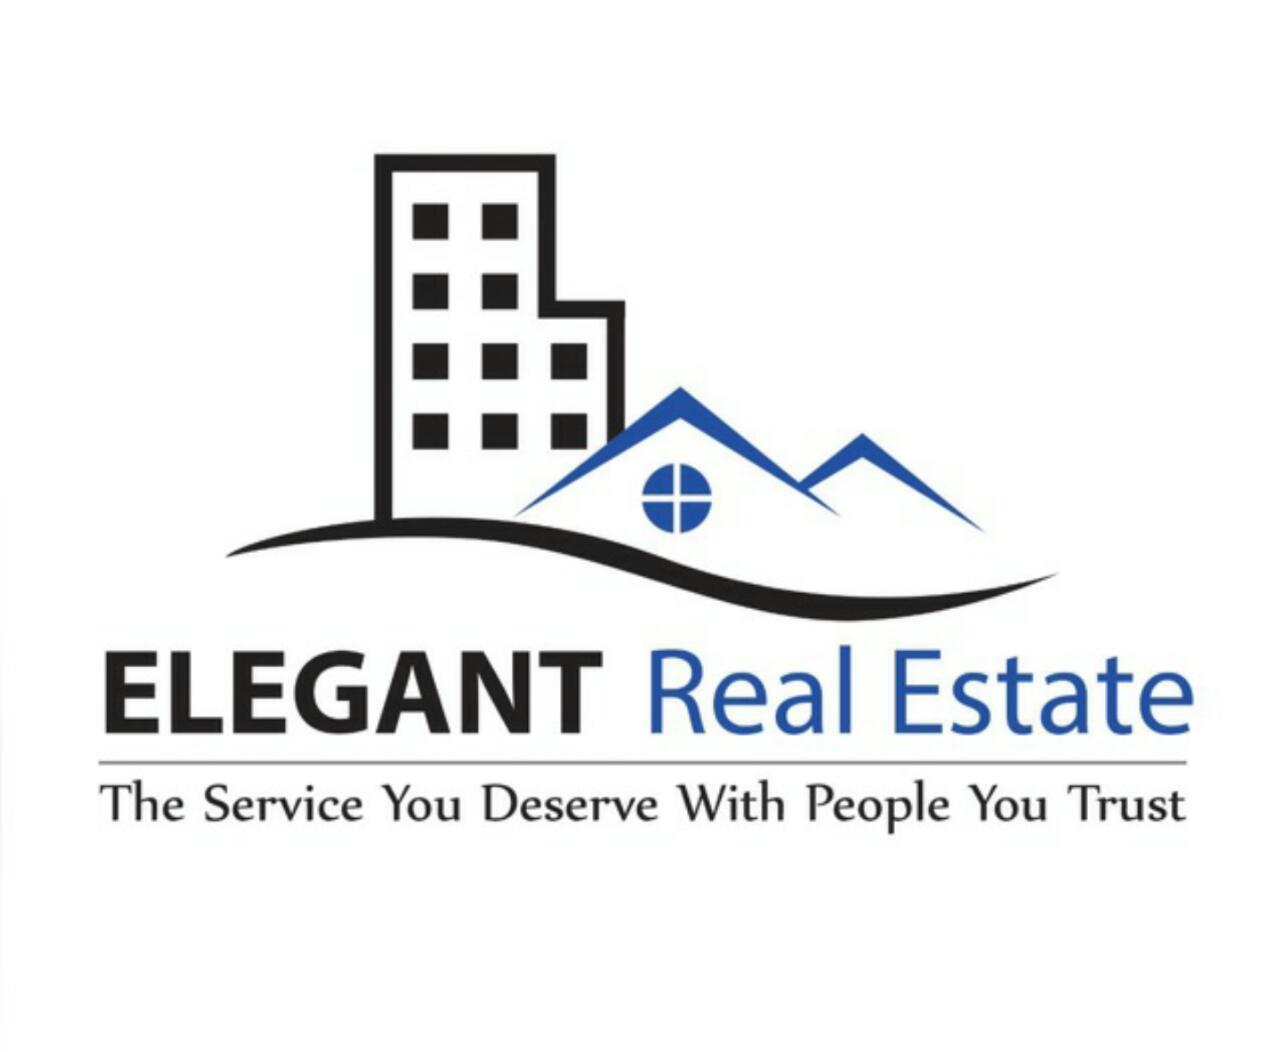 ELEGANT Real Estate